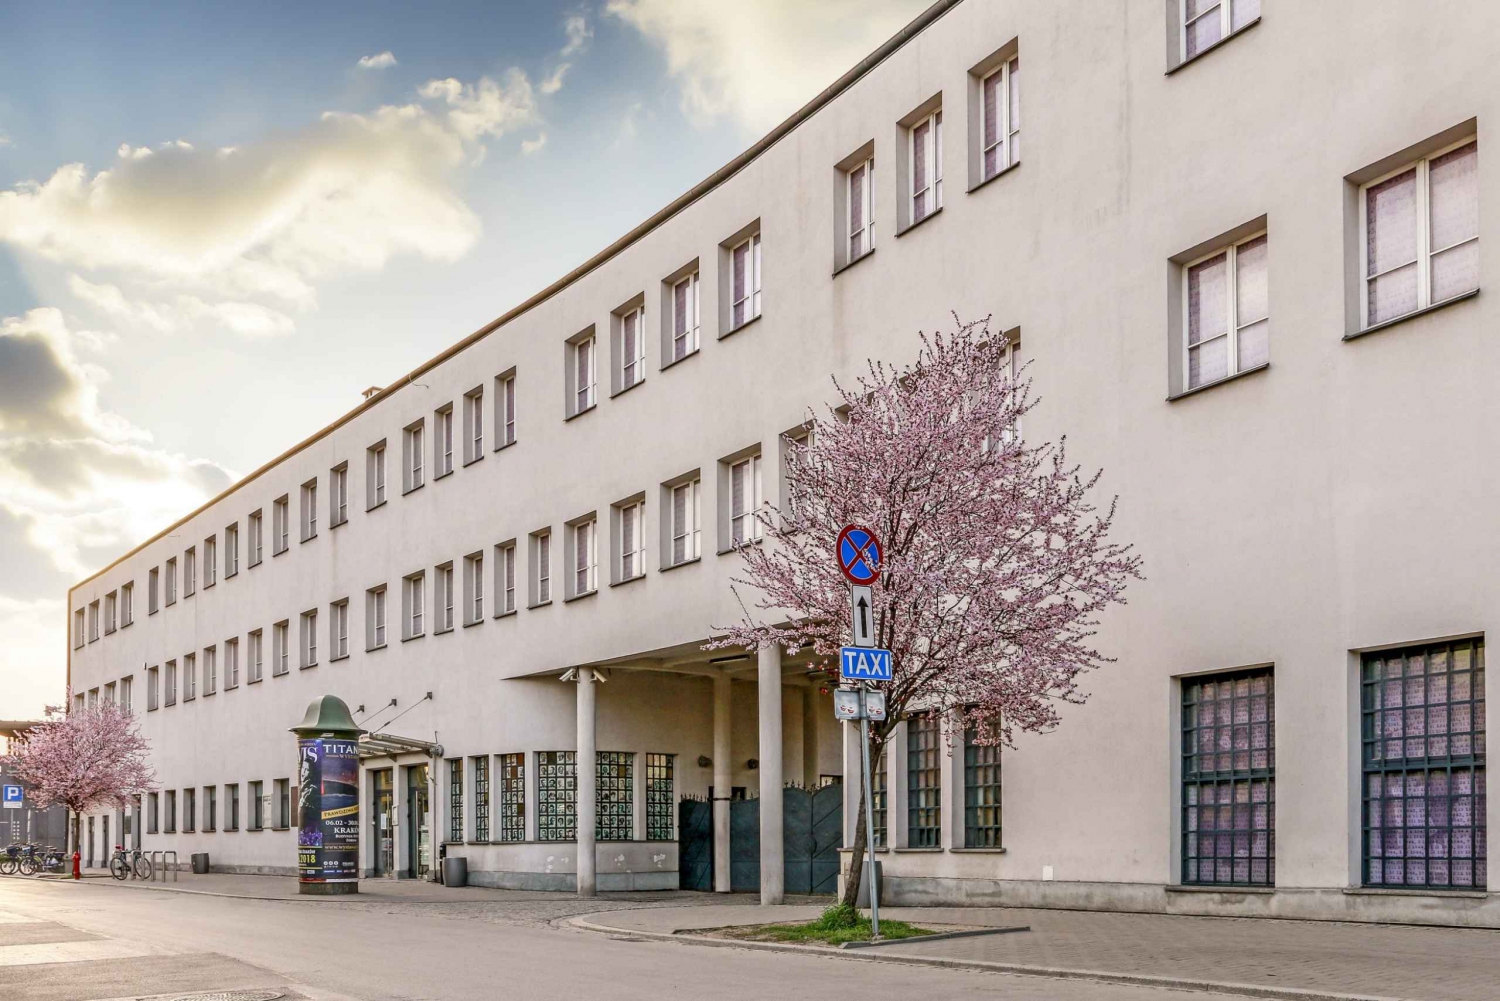 Krakau: Schindlers Fabrik Geführte Tour